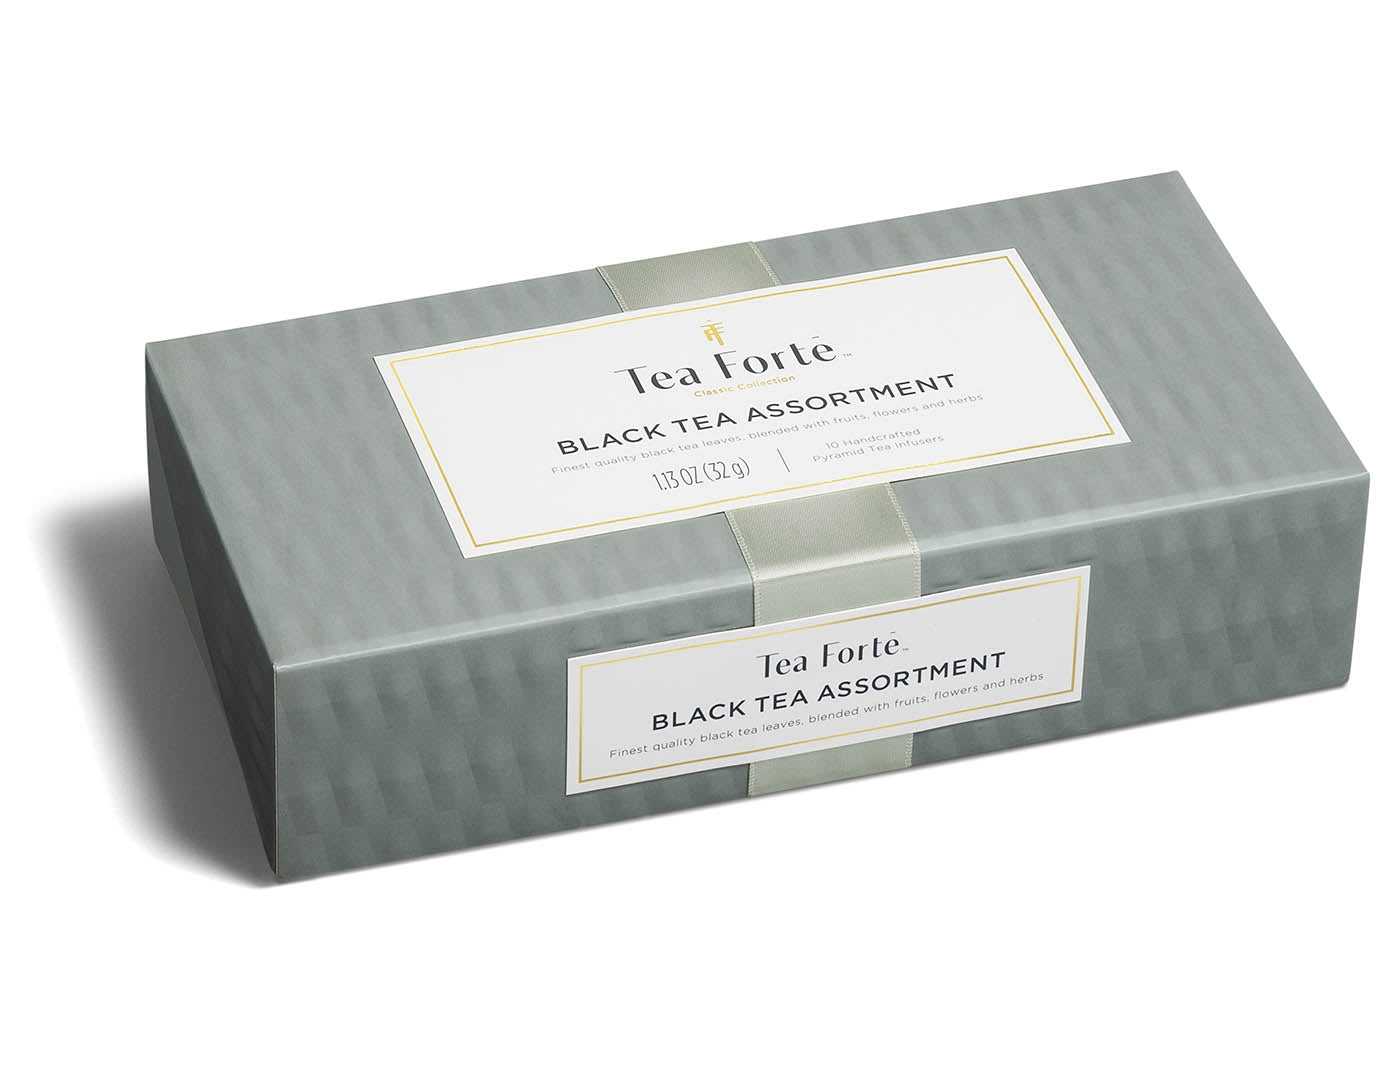 Black Tea tea assortment in a 10 count petite presentation box with lid closed